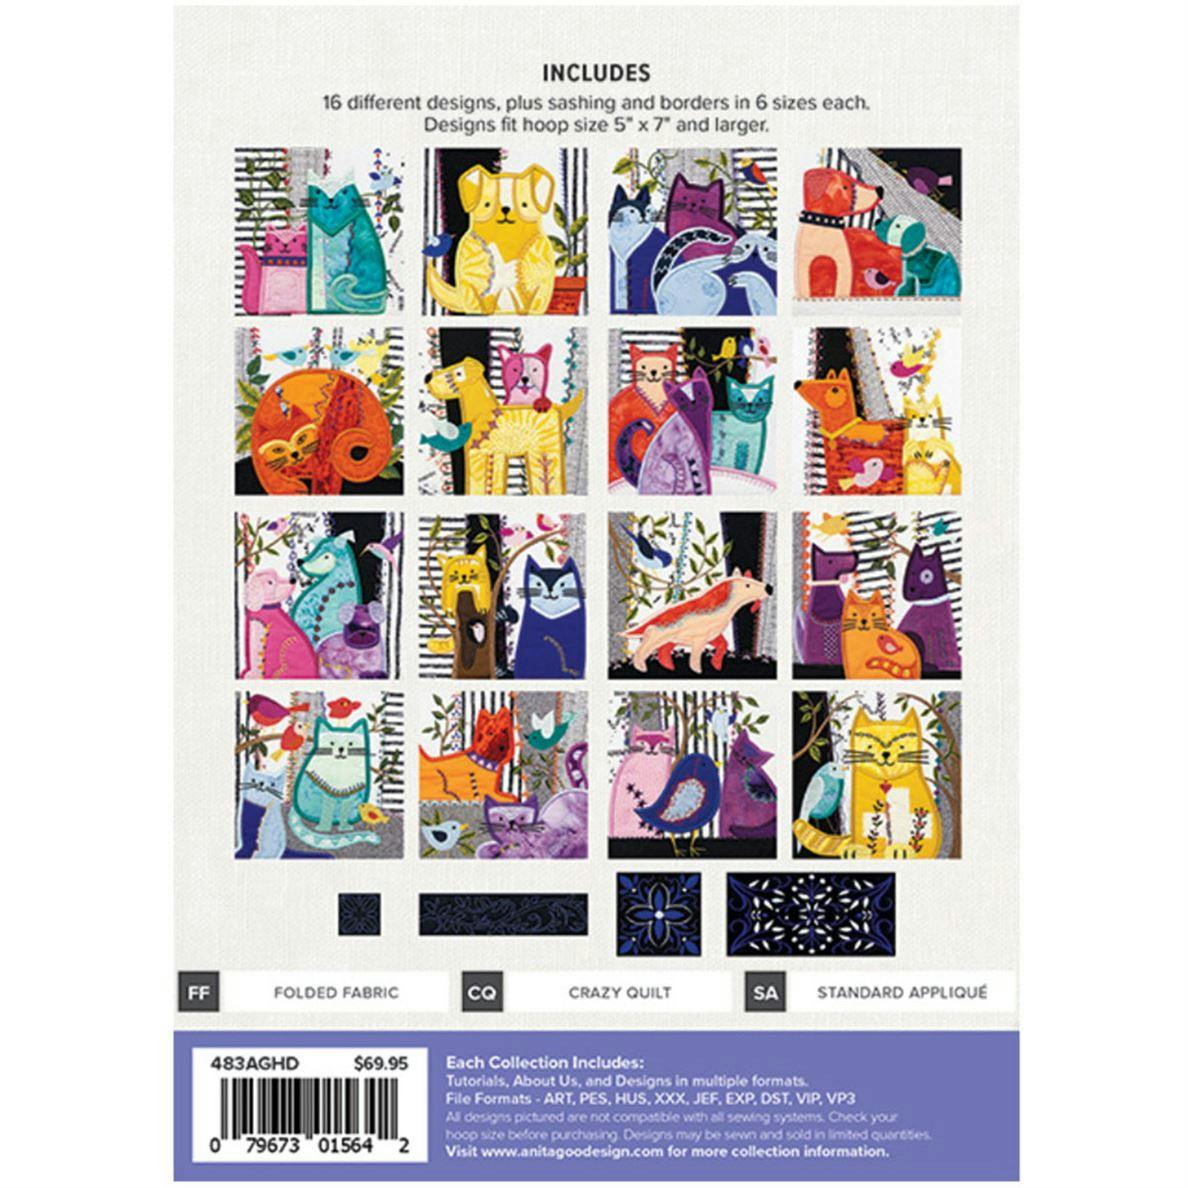 Back cover of Anita Goodesign Patchwork Pets design disc